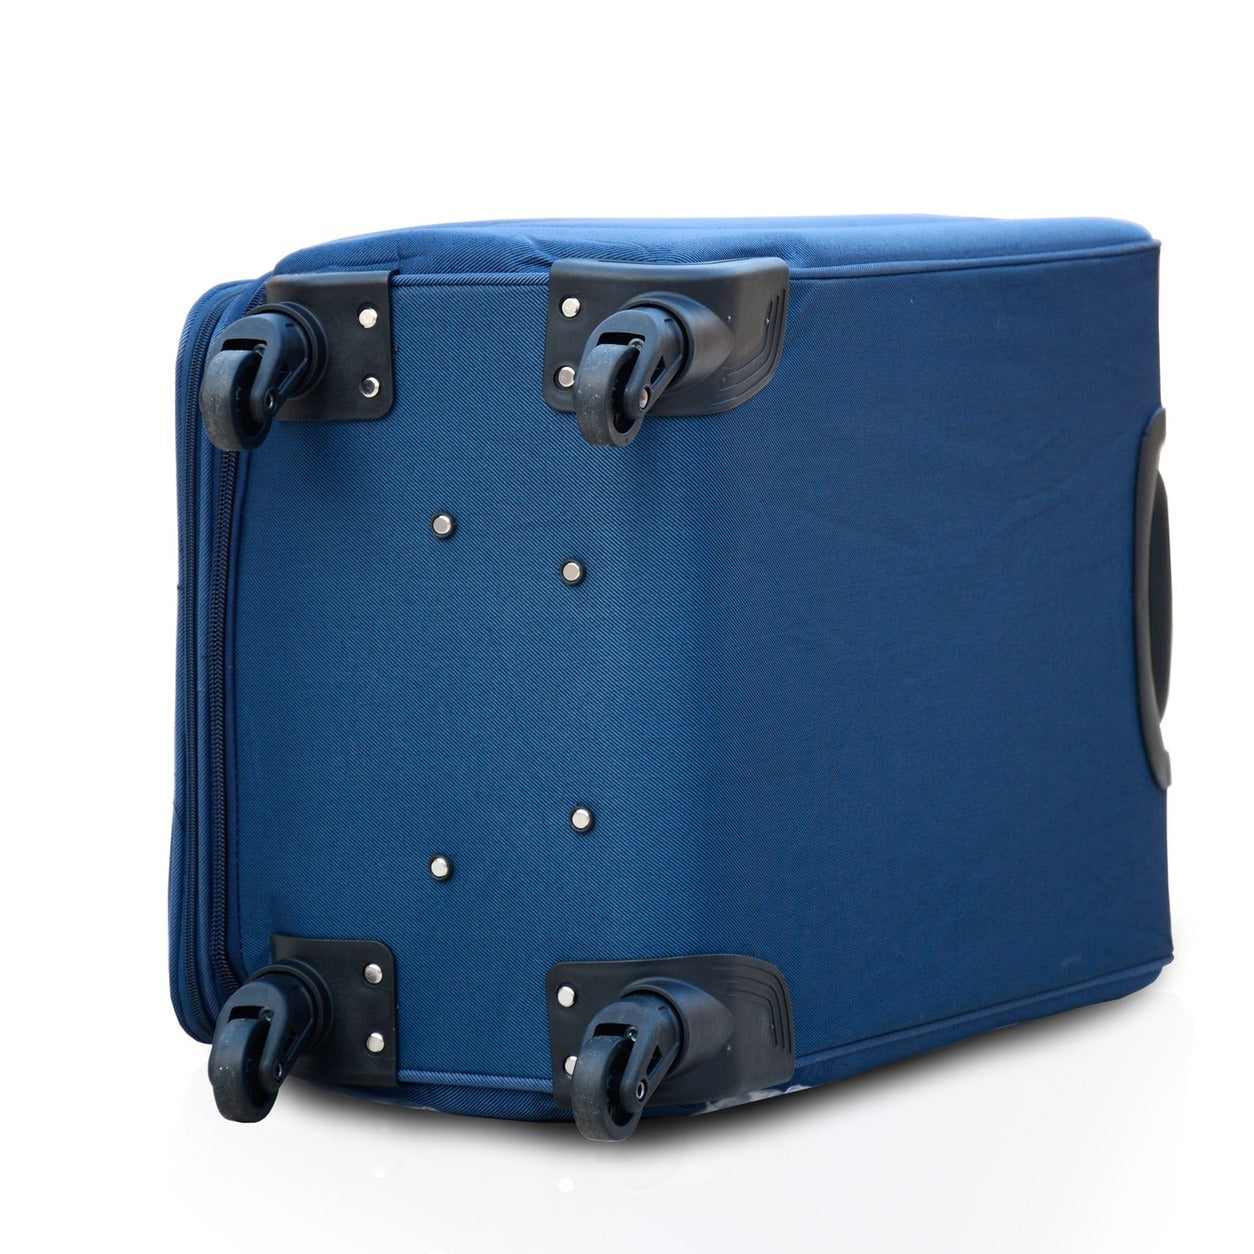 24" Blue Colour SJ JIAN 4 Wheel Luggage Lightweight Soft Material Trolley Bag Zaappy.com